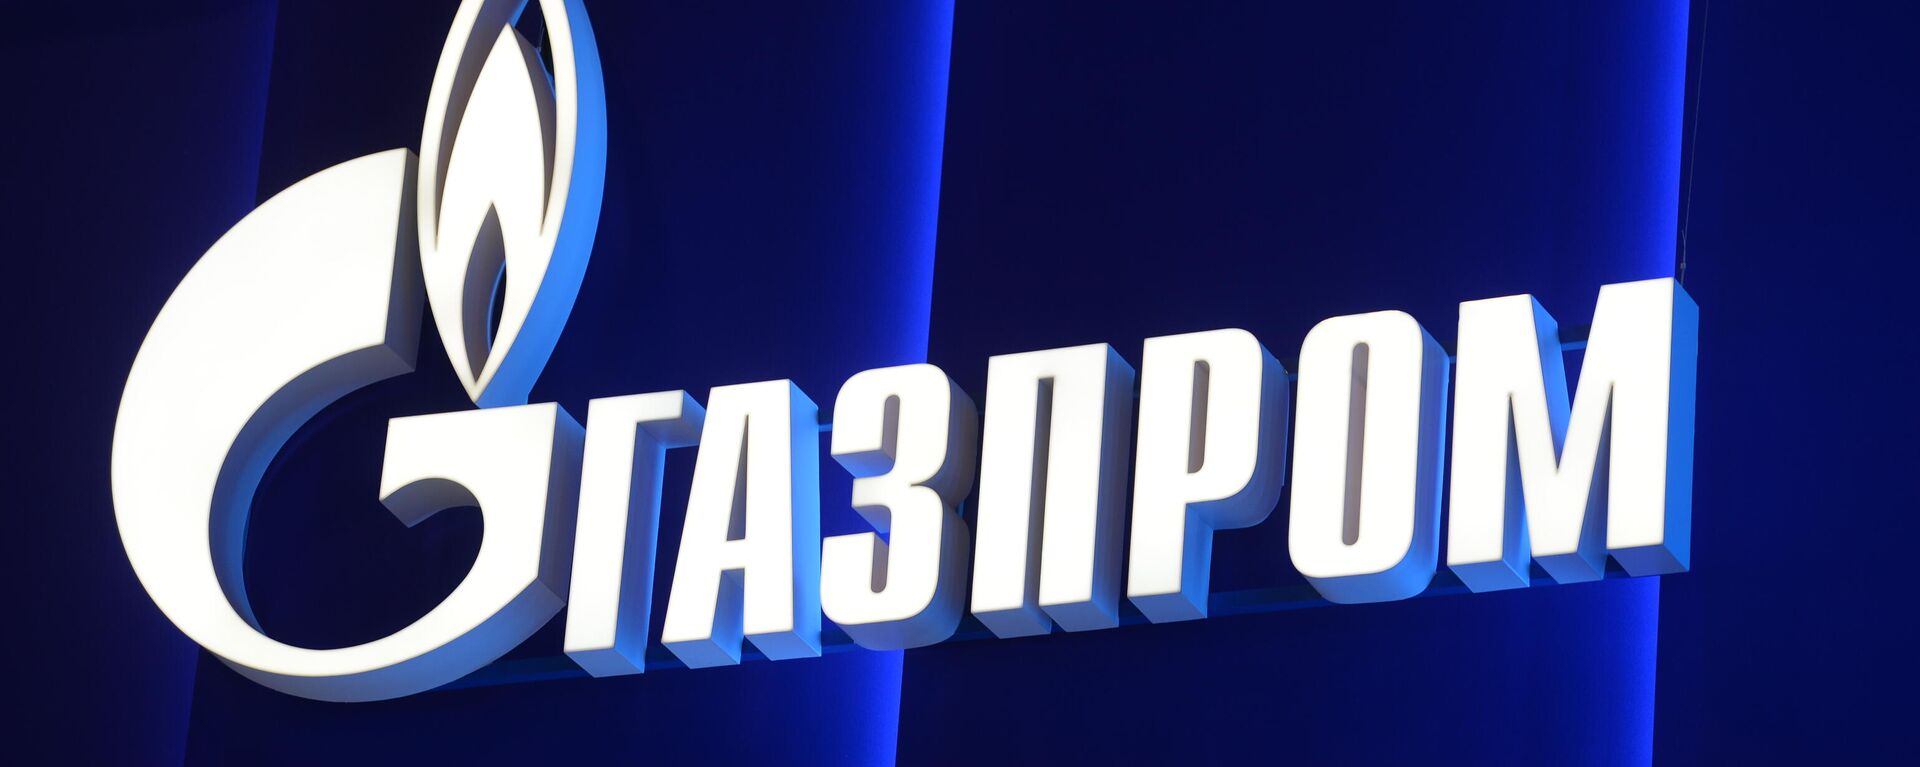 Логотип компании Газпром, архивное фото  - Sputnik Узбекистан, 1920, 28.10.2021